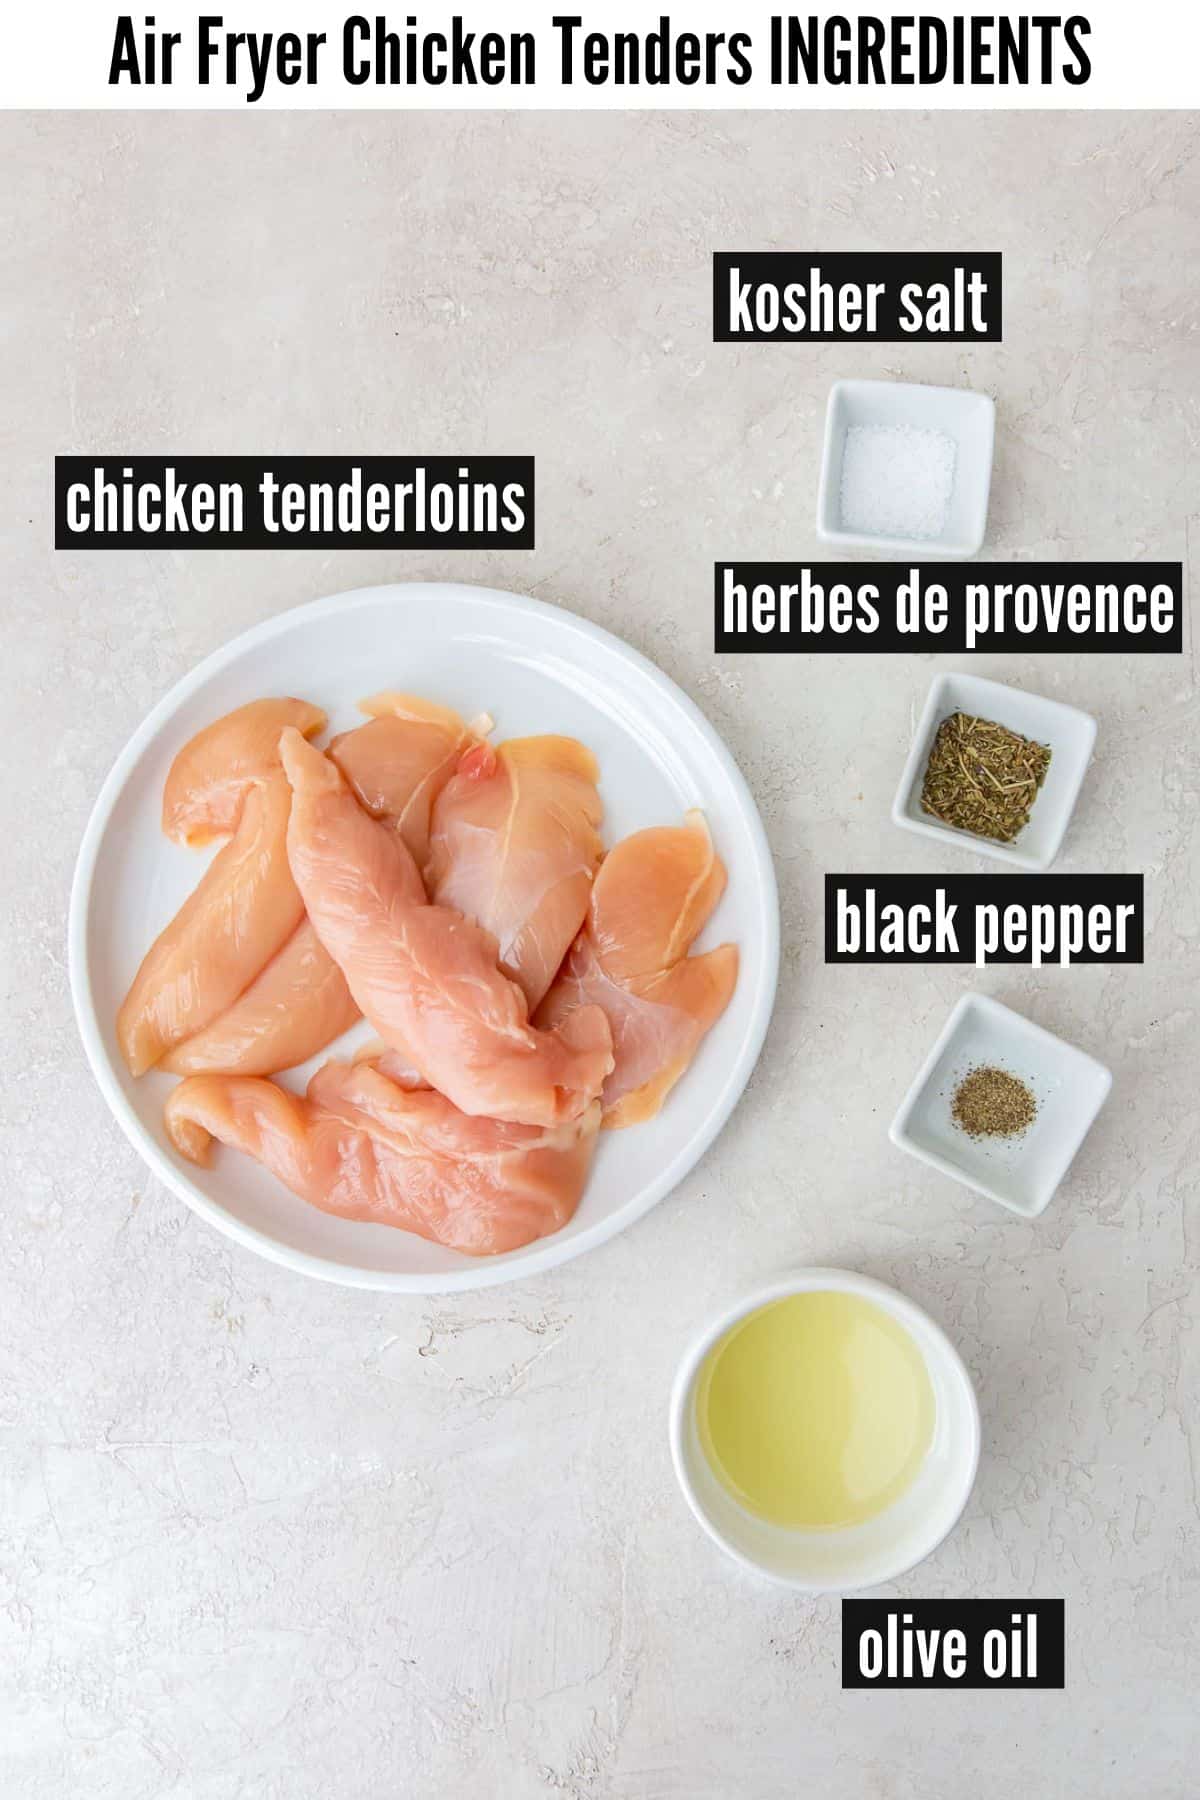 air fryer chicken tenders no breading labelled ingredients.